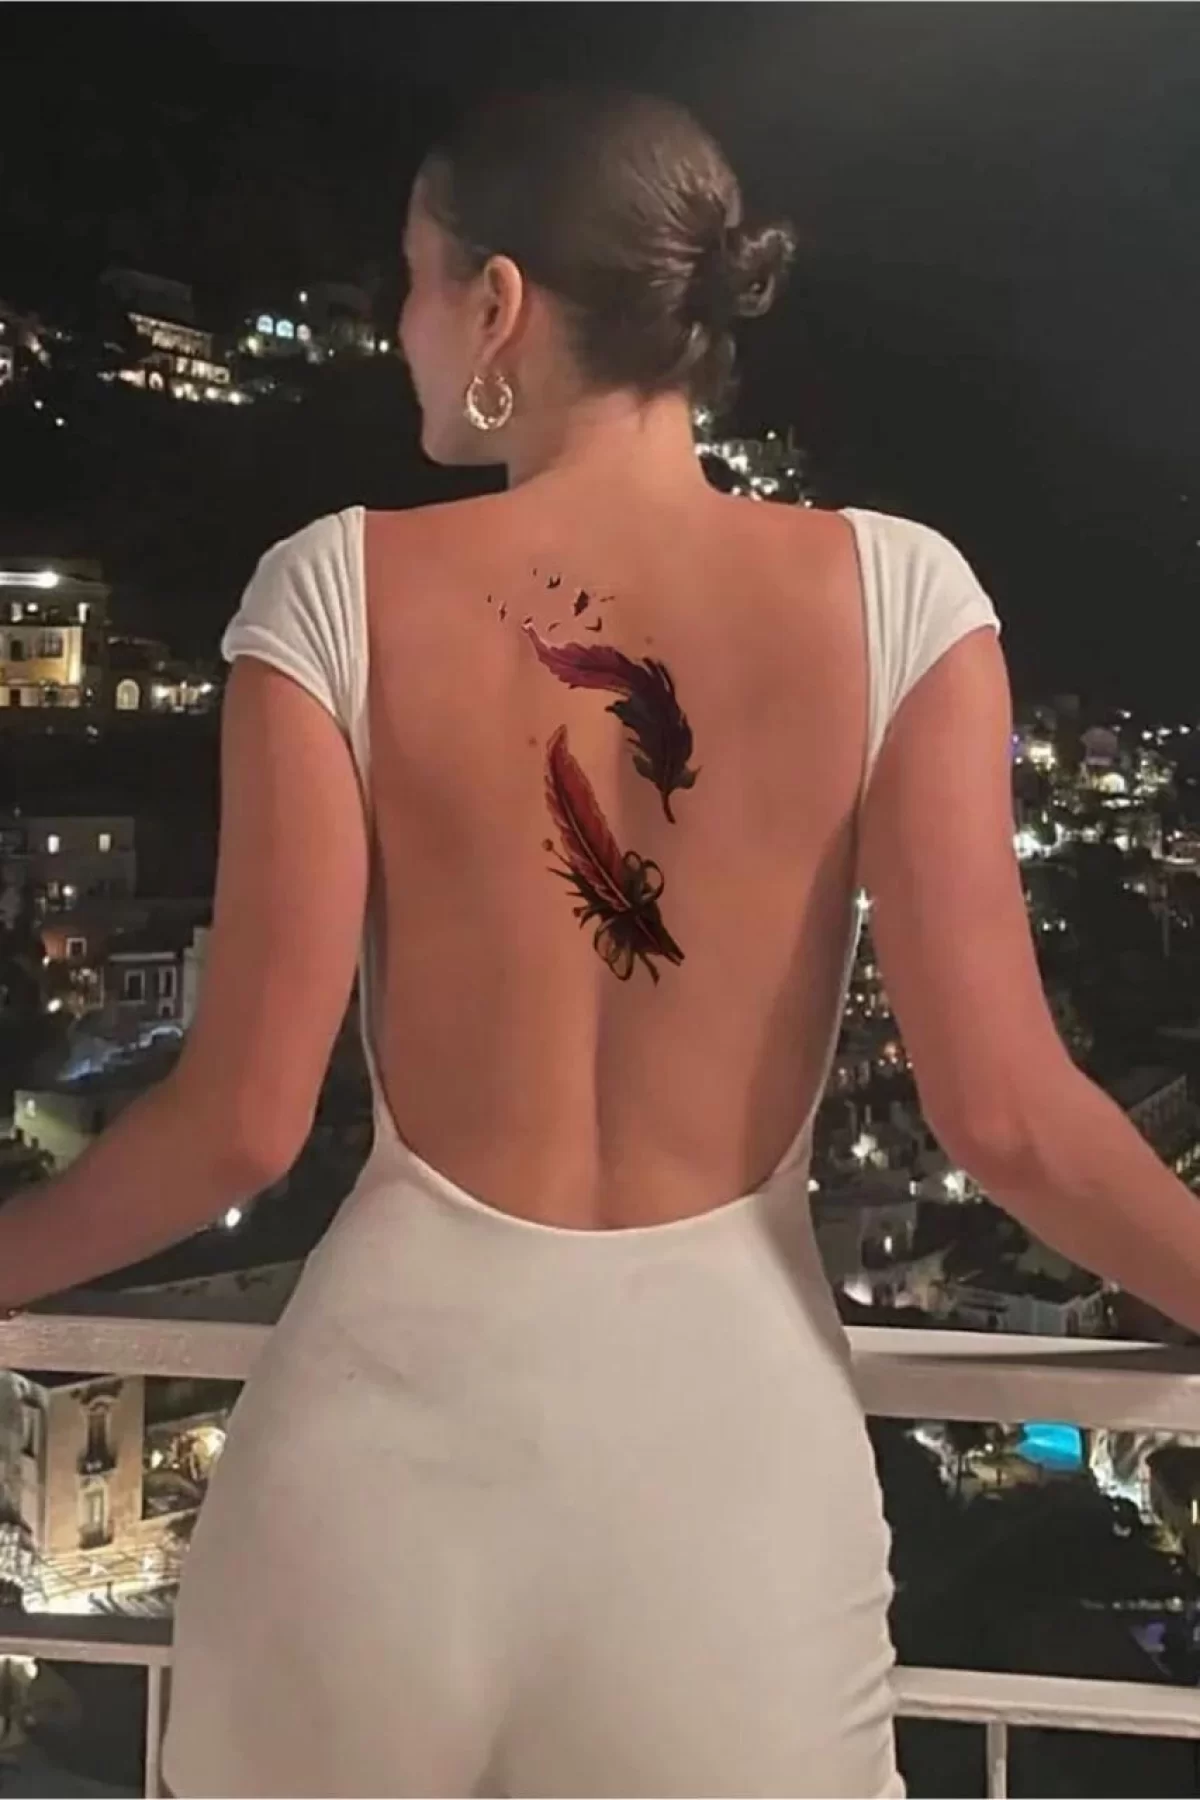 Geçici Tüy Figürlü Dövme Tattoo